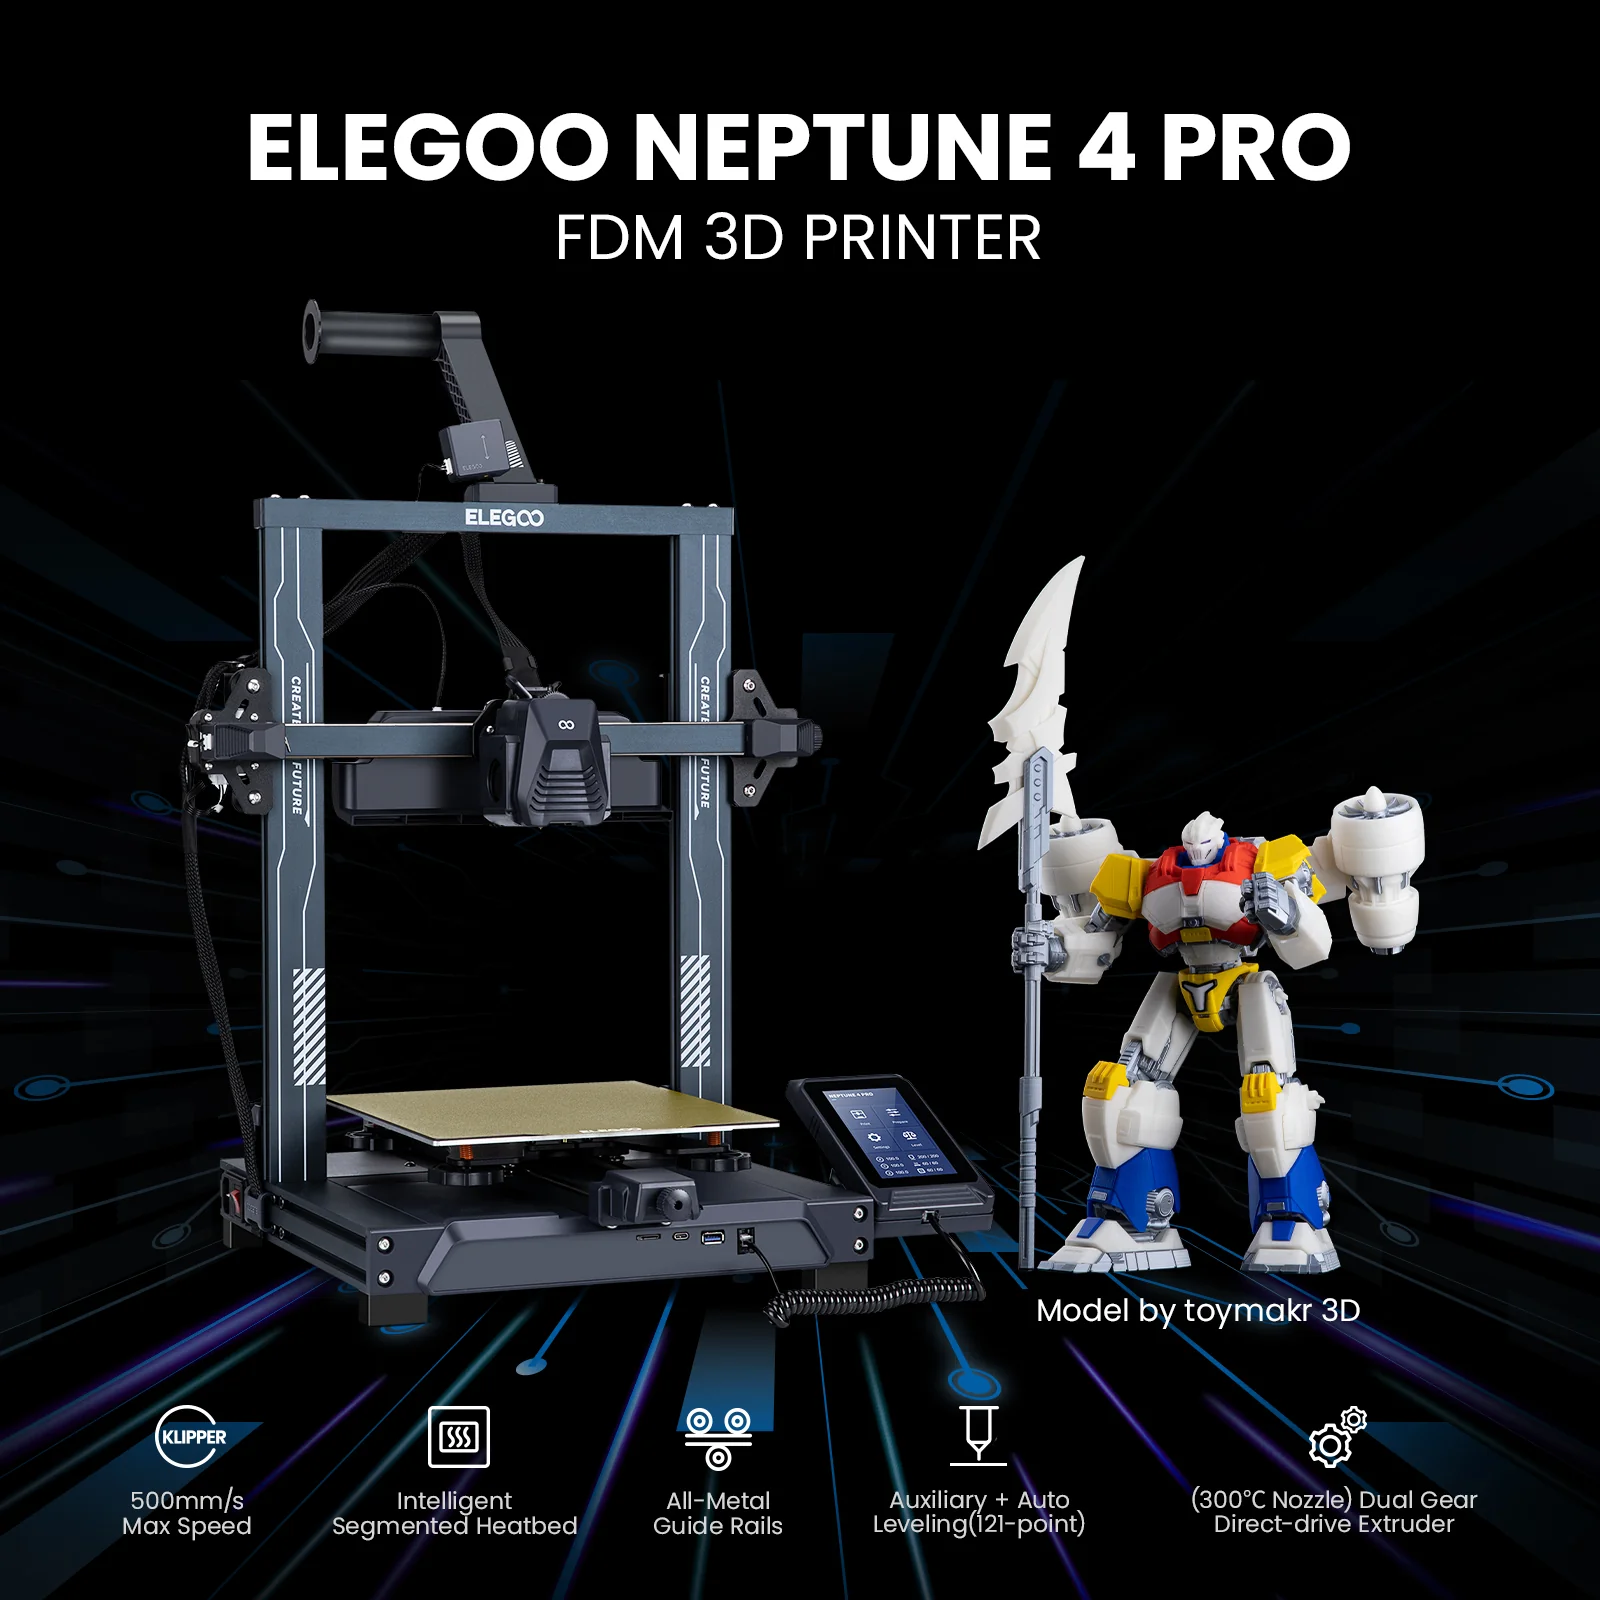 Elegoo Neptune 4 Review - Klipper Enabled Generation